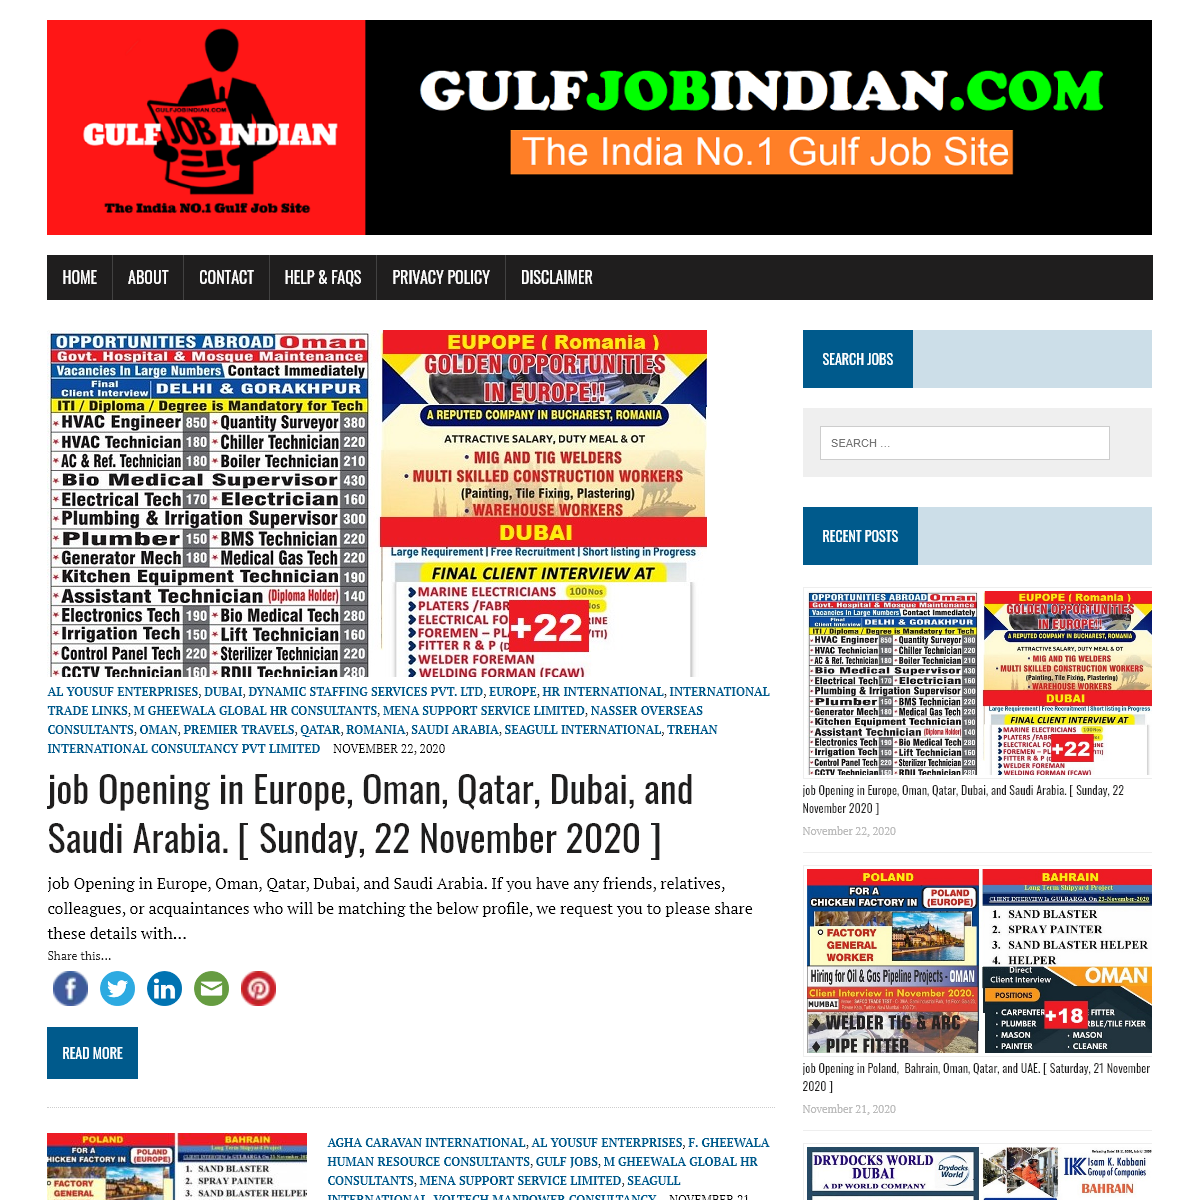 A complete backup of gulfjobindian.com